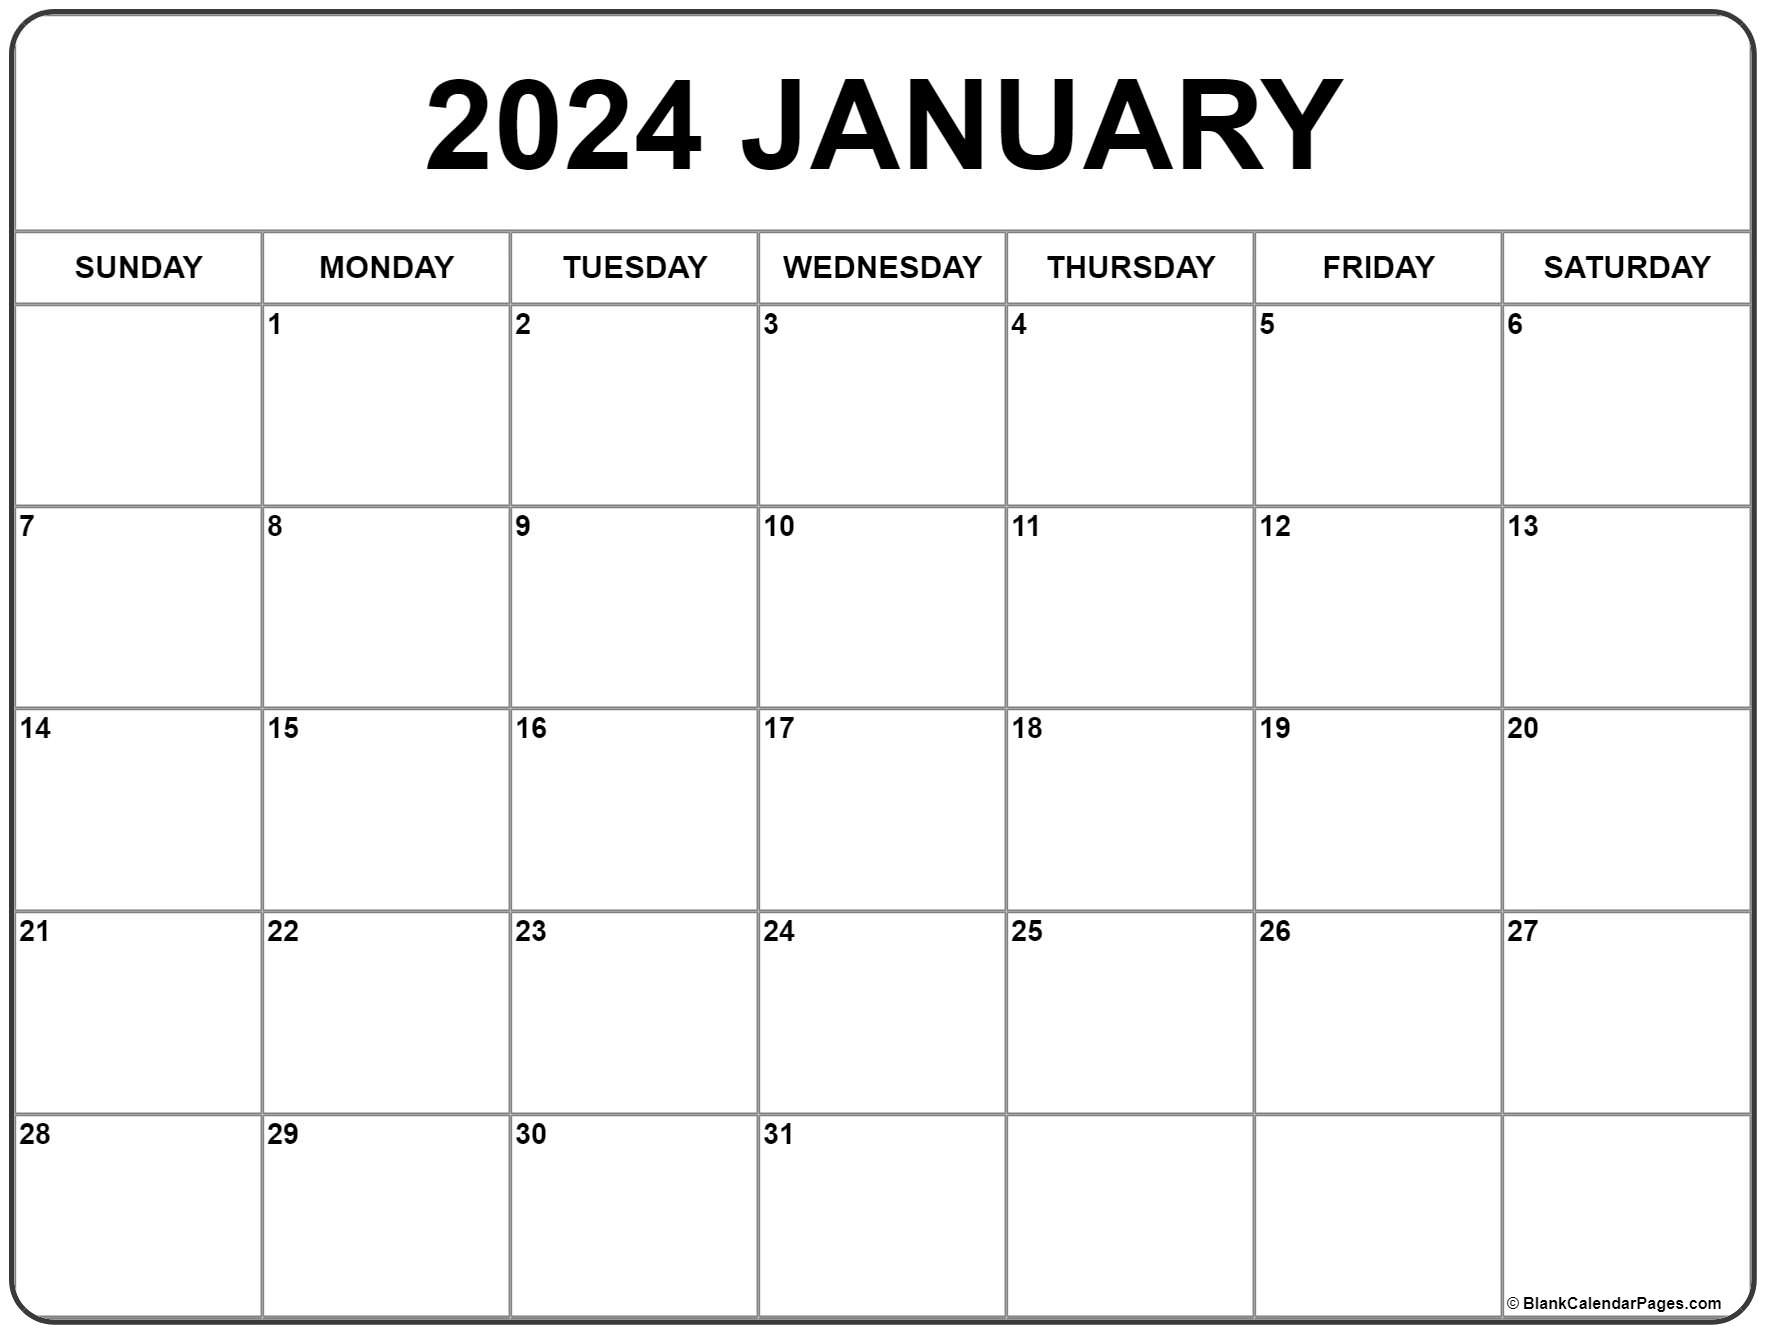 January 2024 Calendar | Free Printable Calendar for Jan 2024 Calendar Printable